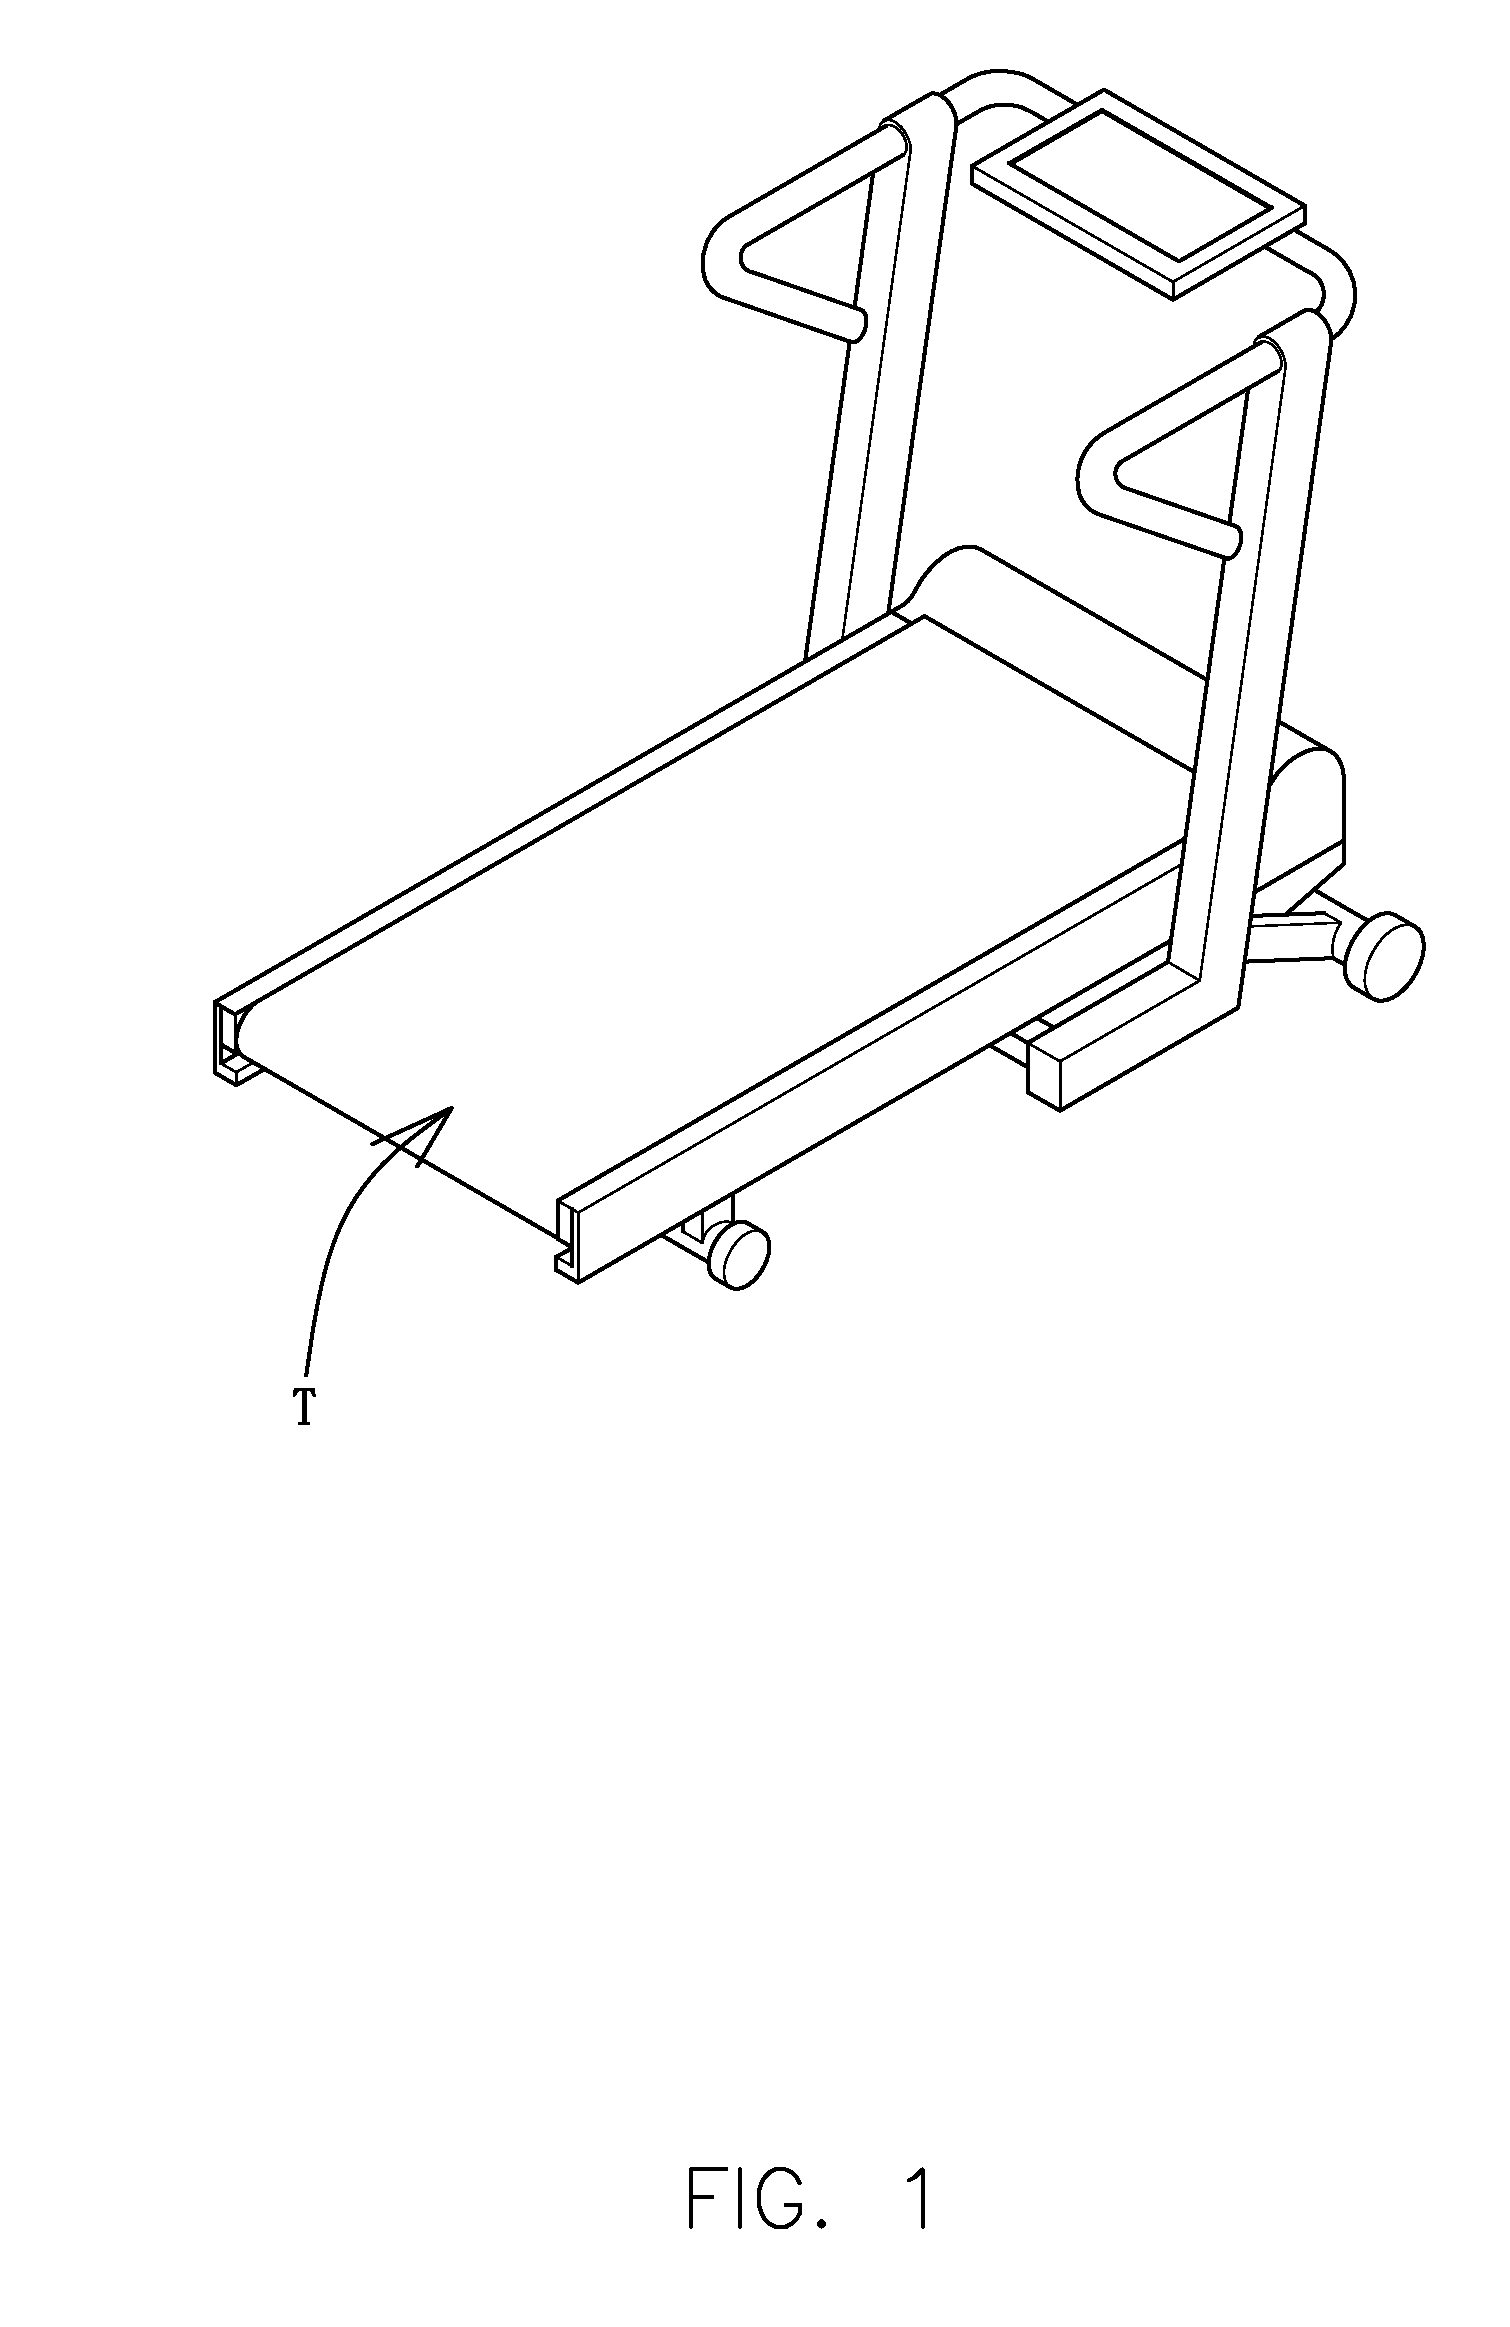 Conveyor belt or treadmill belt